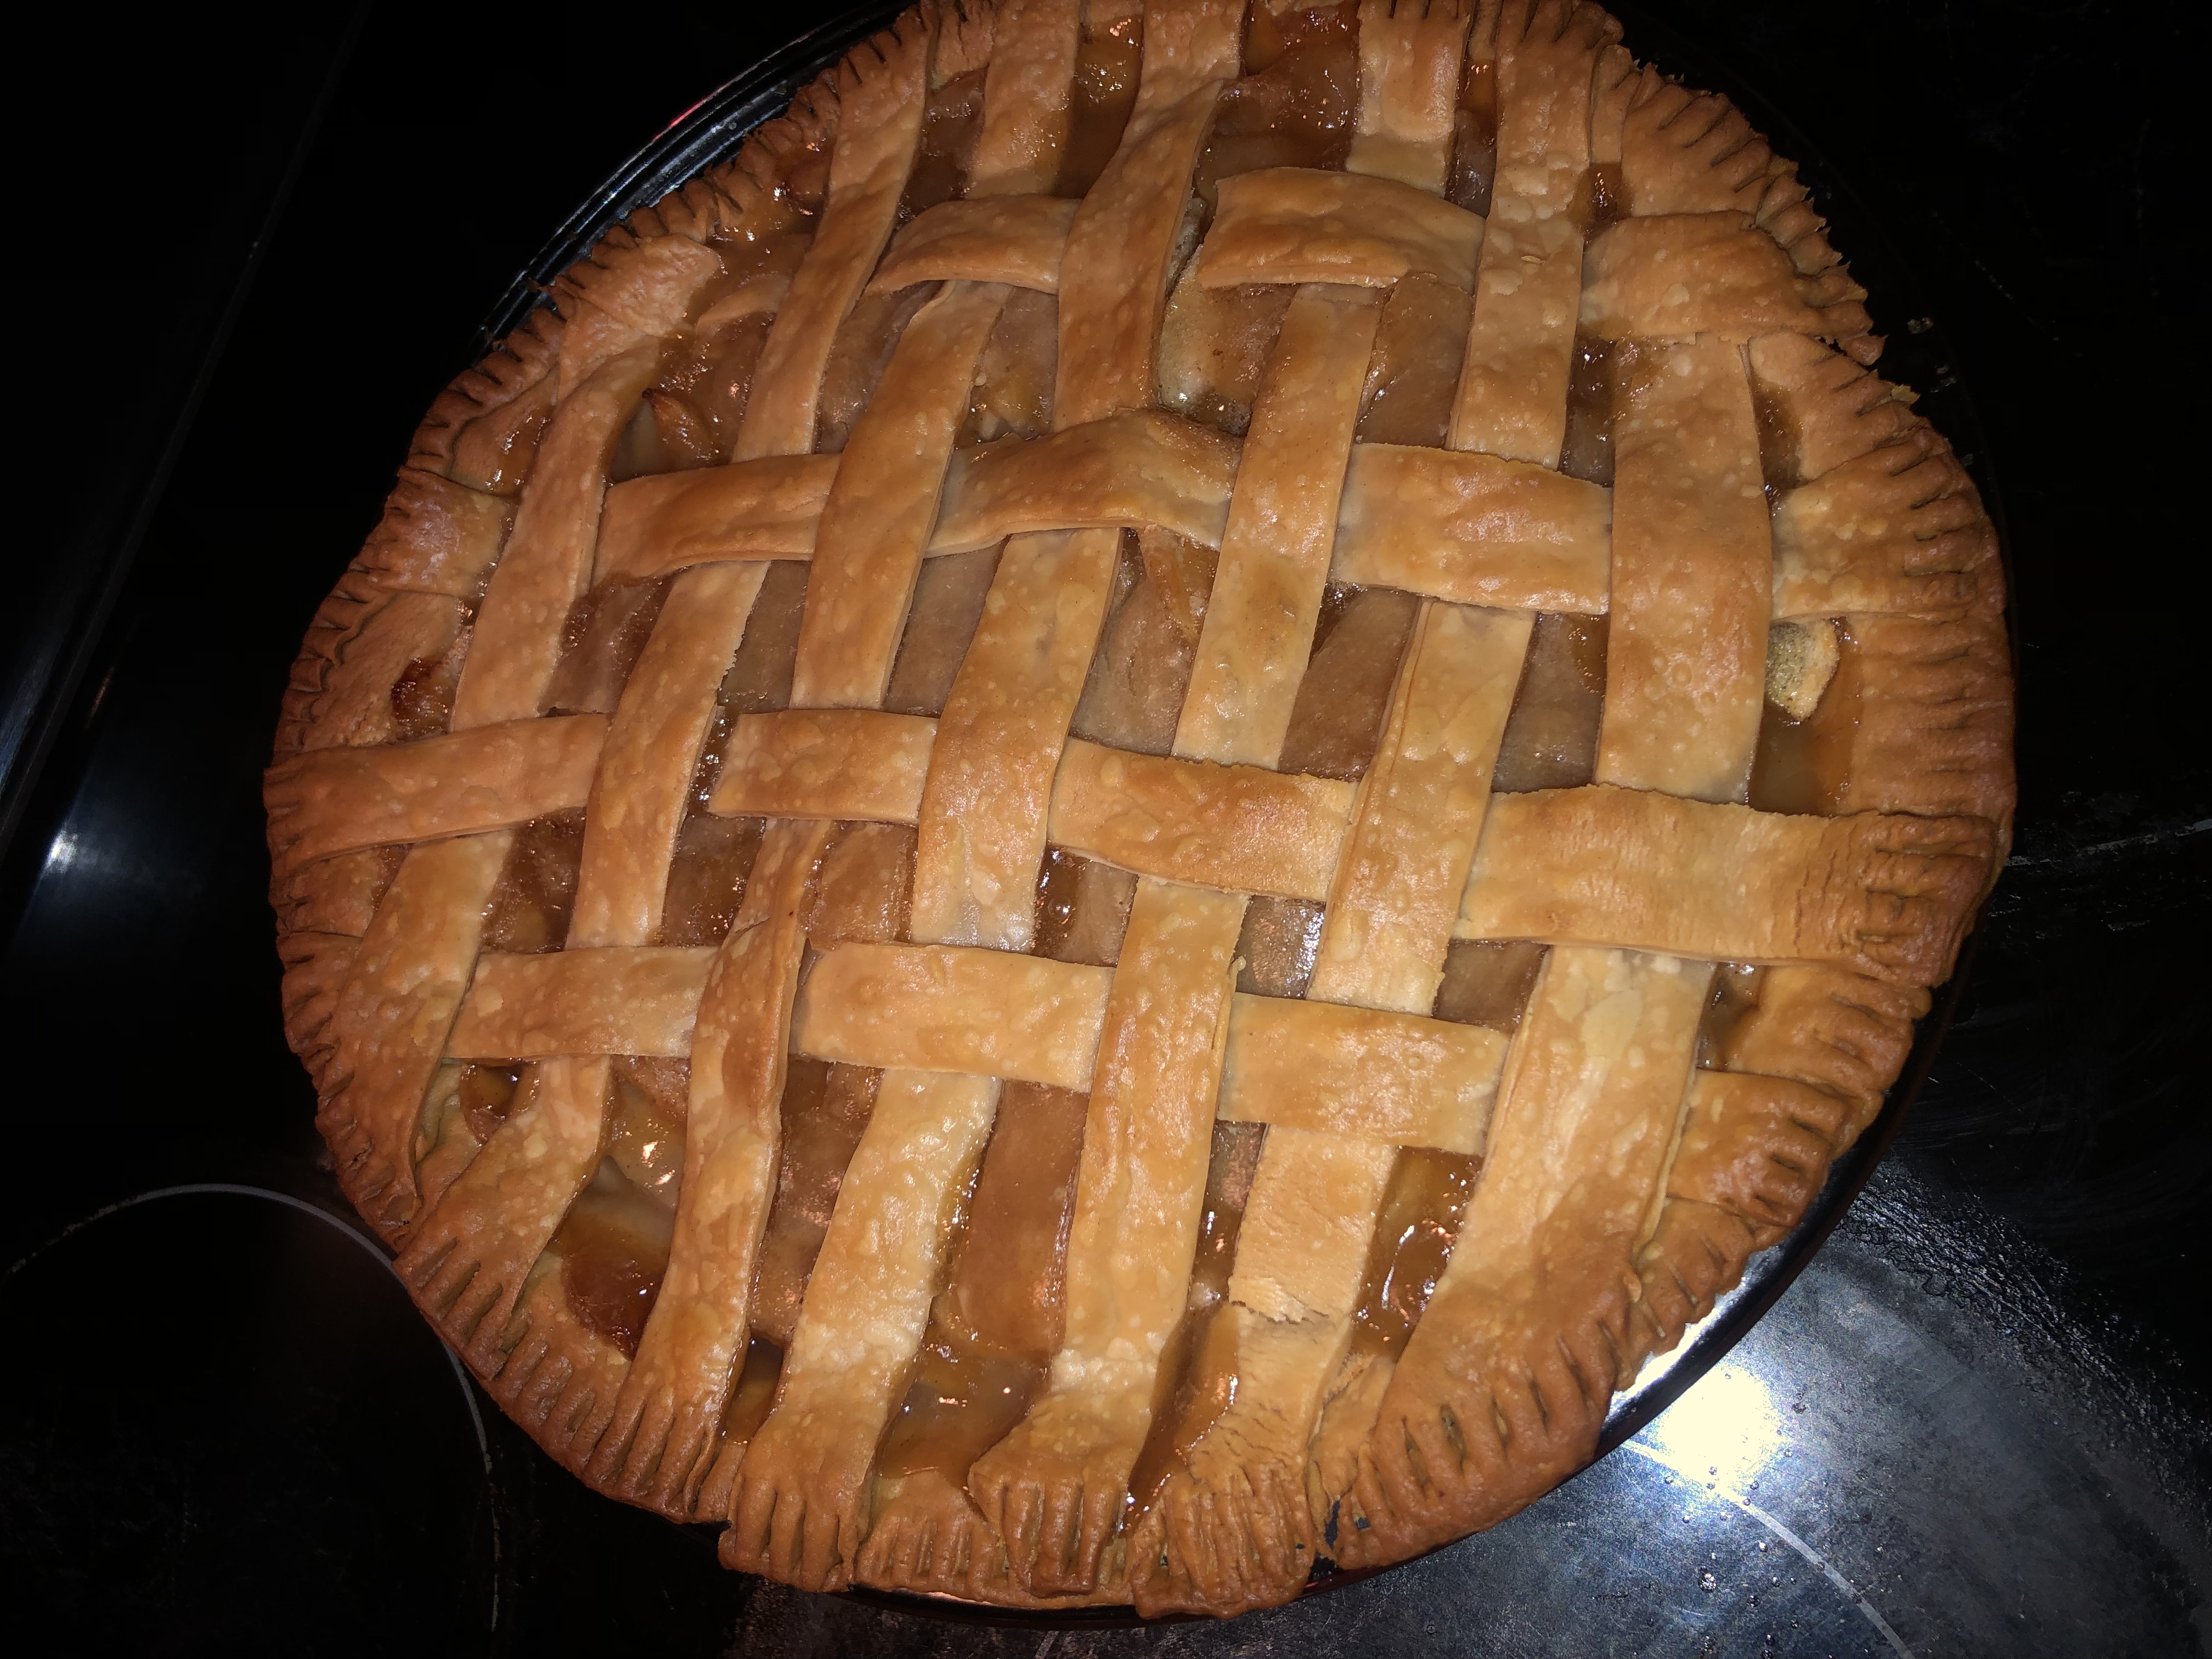 Apple Pie by Grandma Ople Allrecipes Member